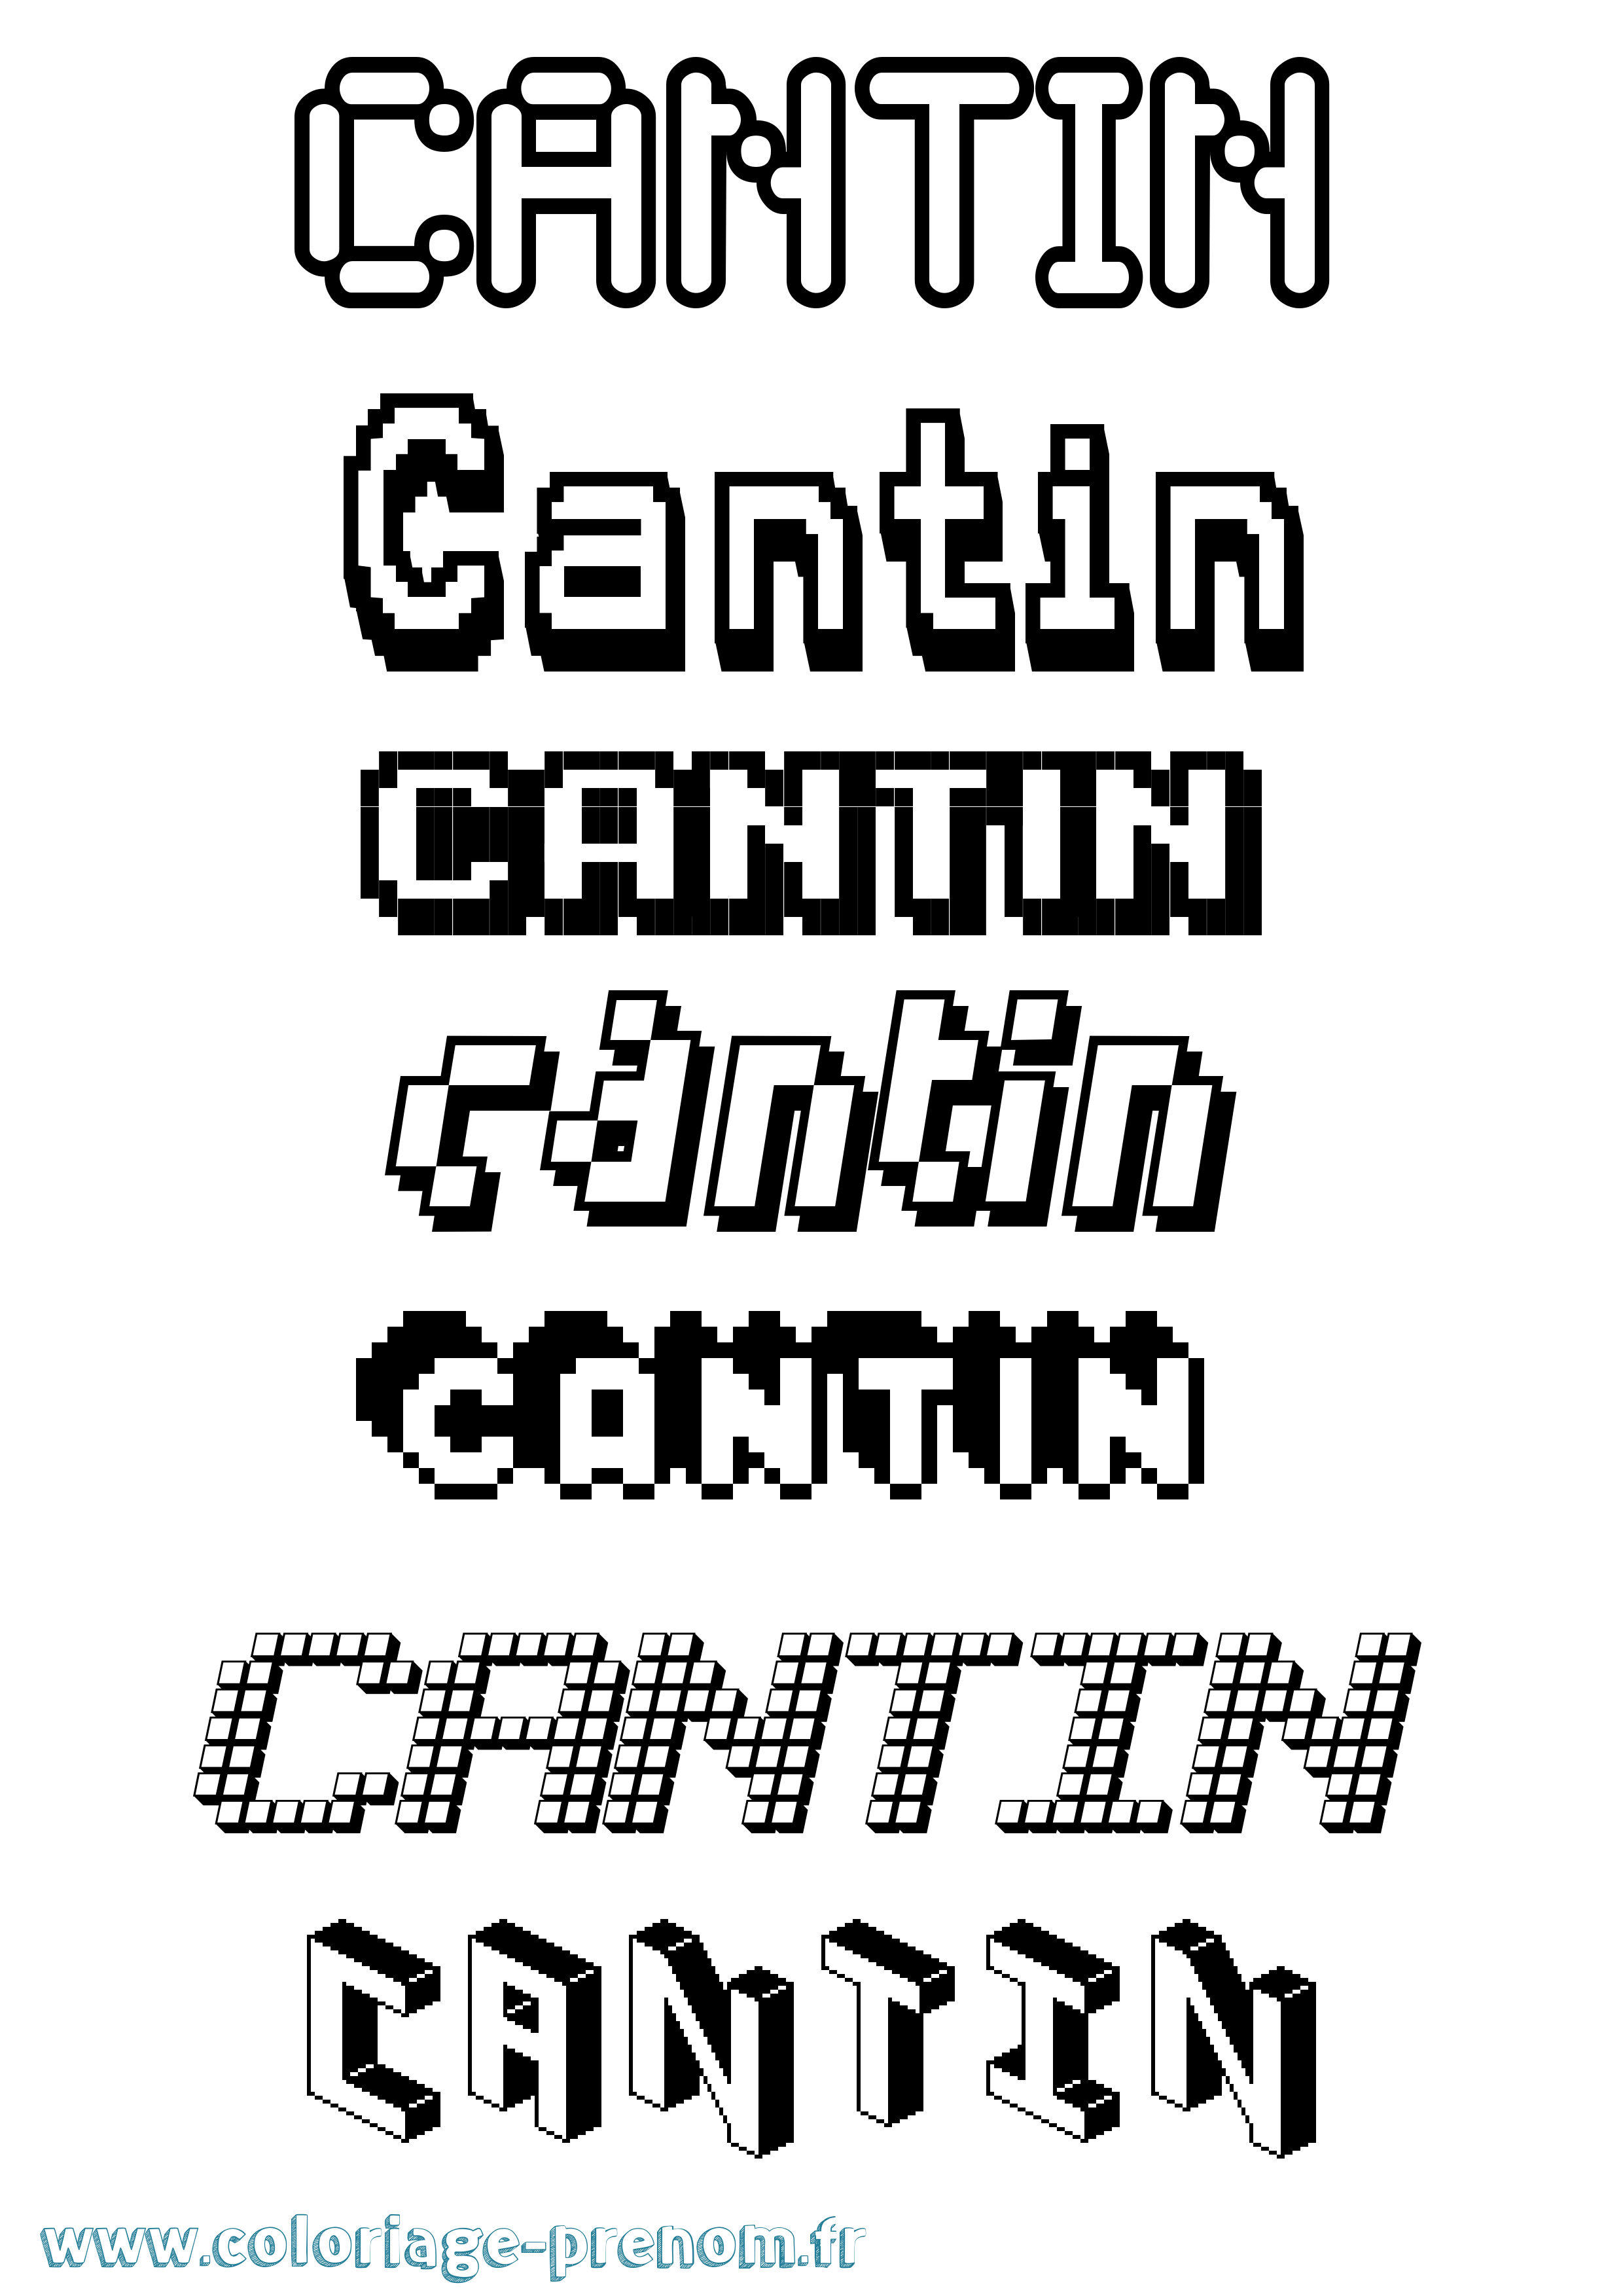 Coloriage prénom Cantin Pixel